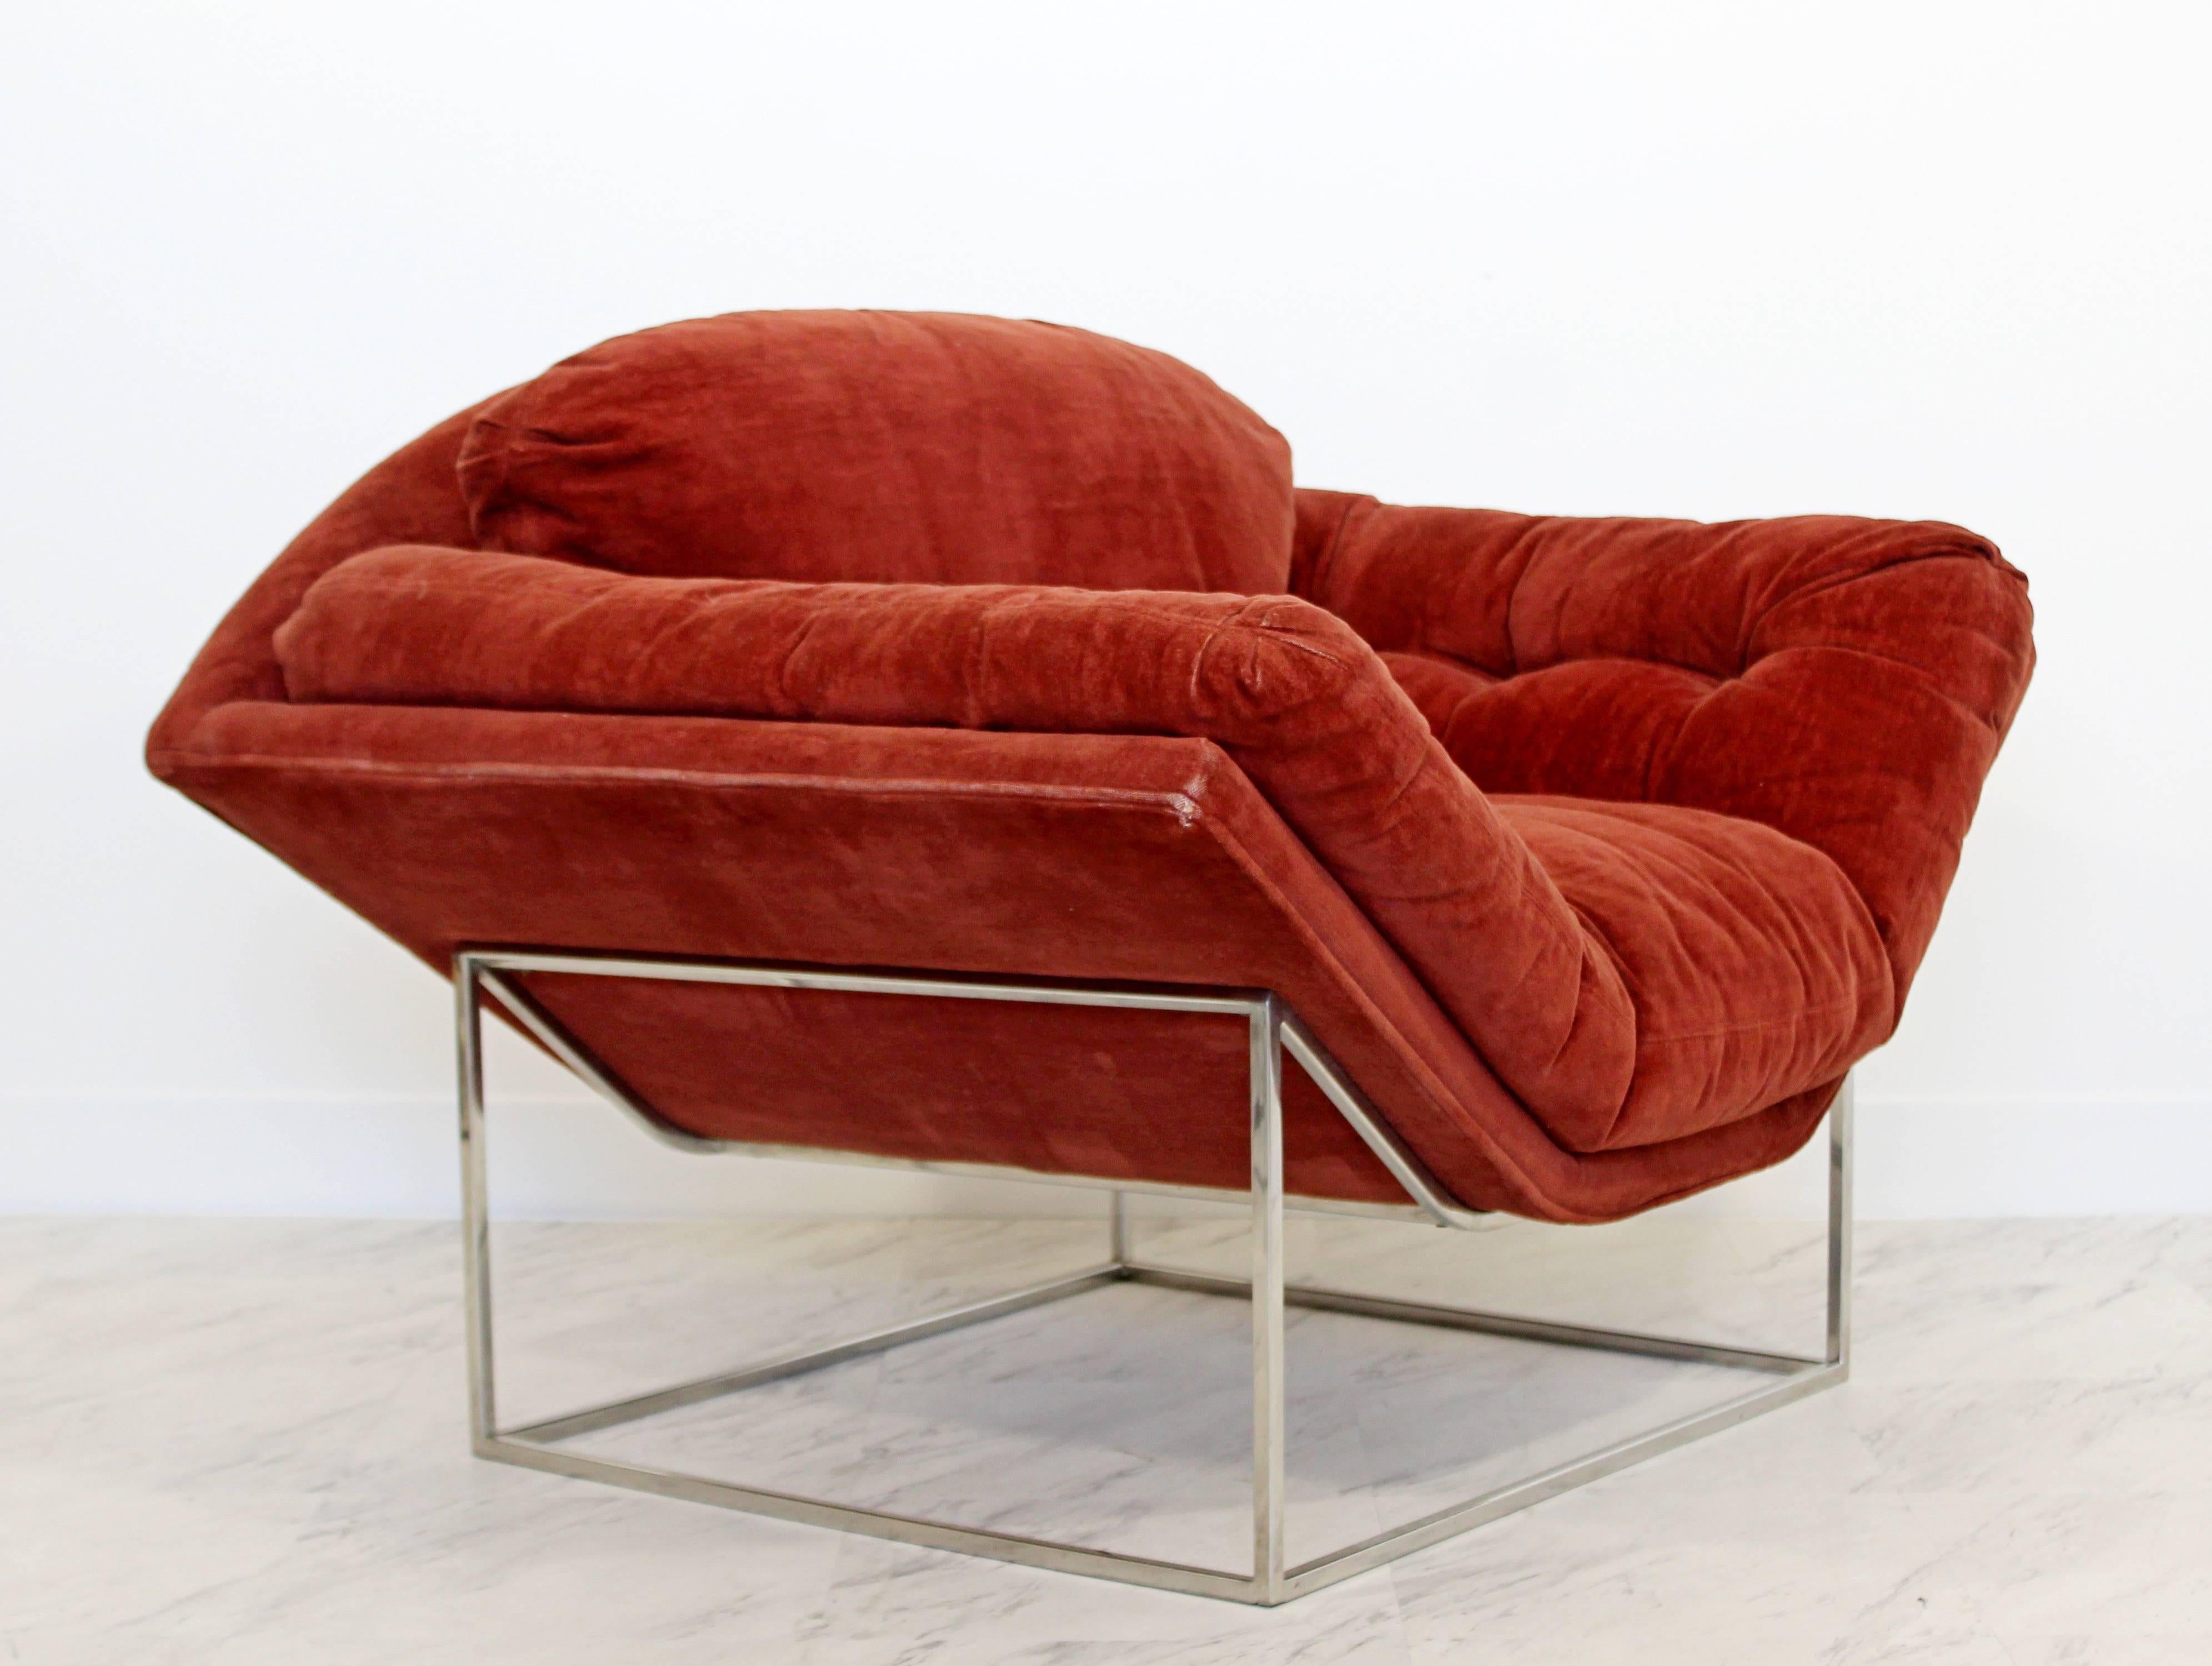 American Mid-Century Modern Rare Milo Baughman Floating Chrome Lounge Chair, 1960s